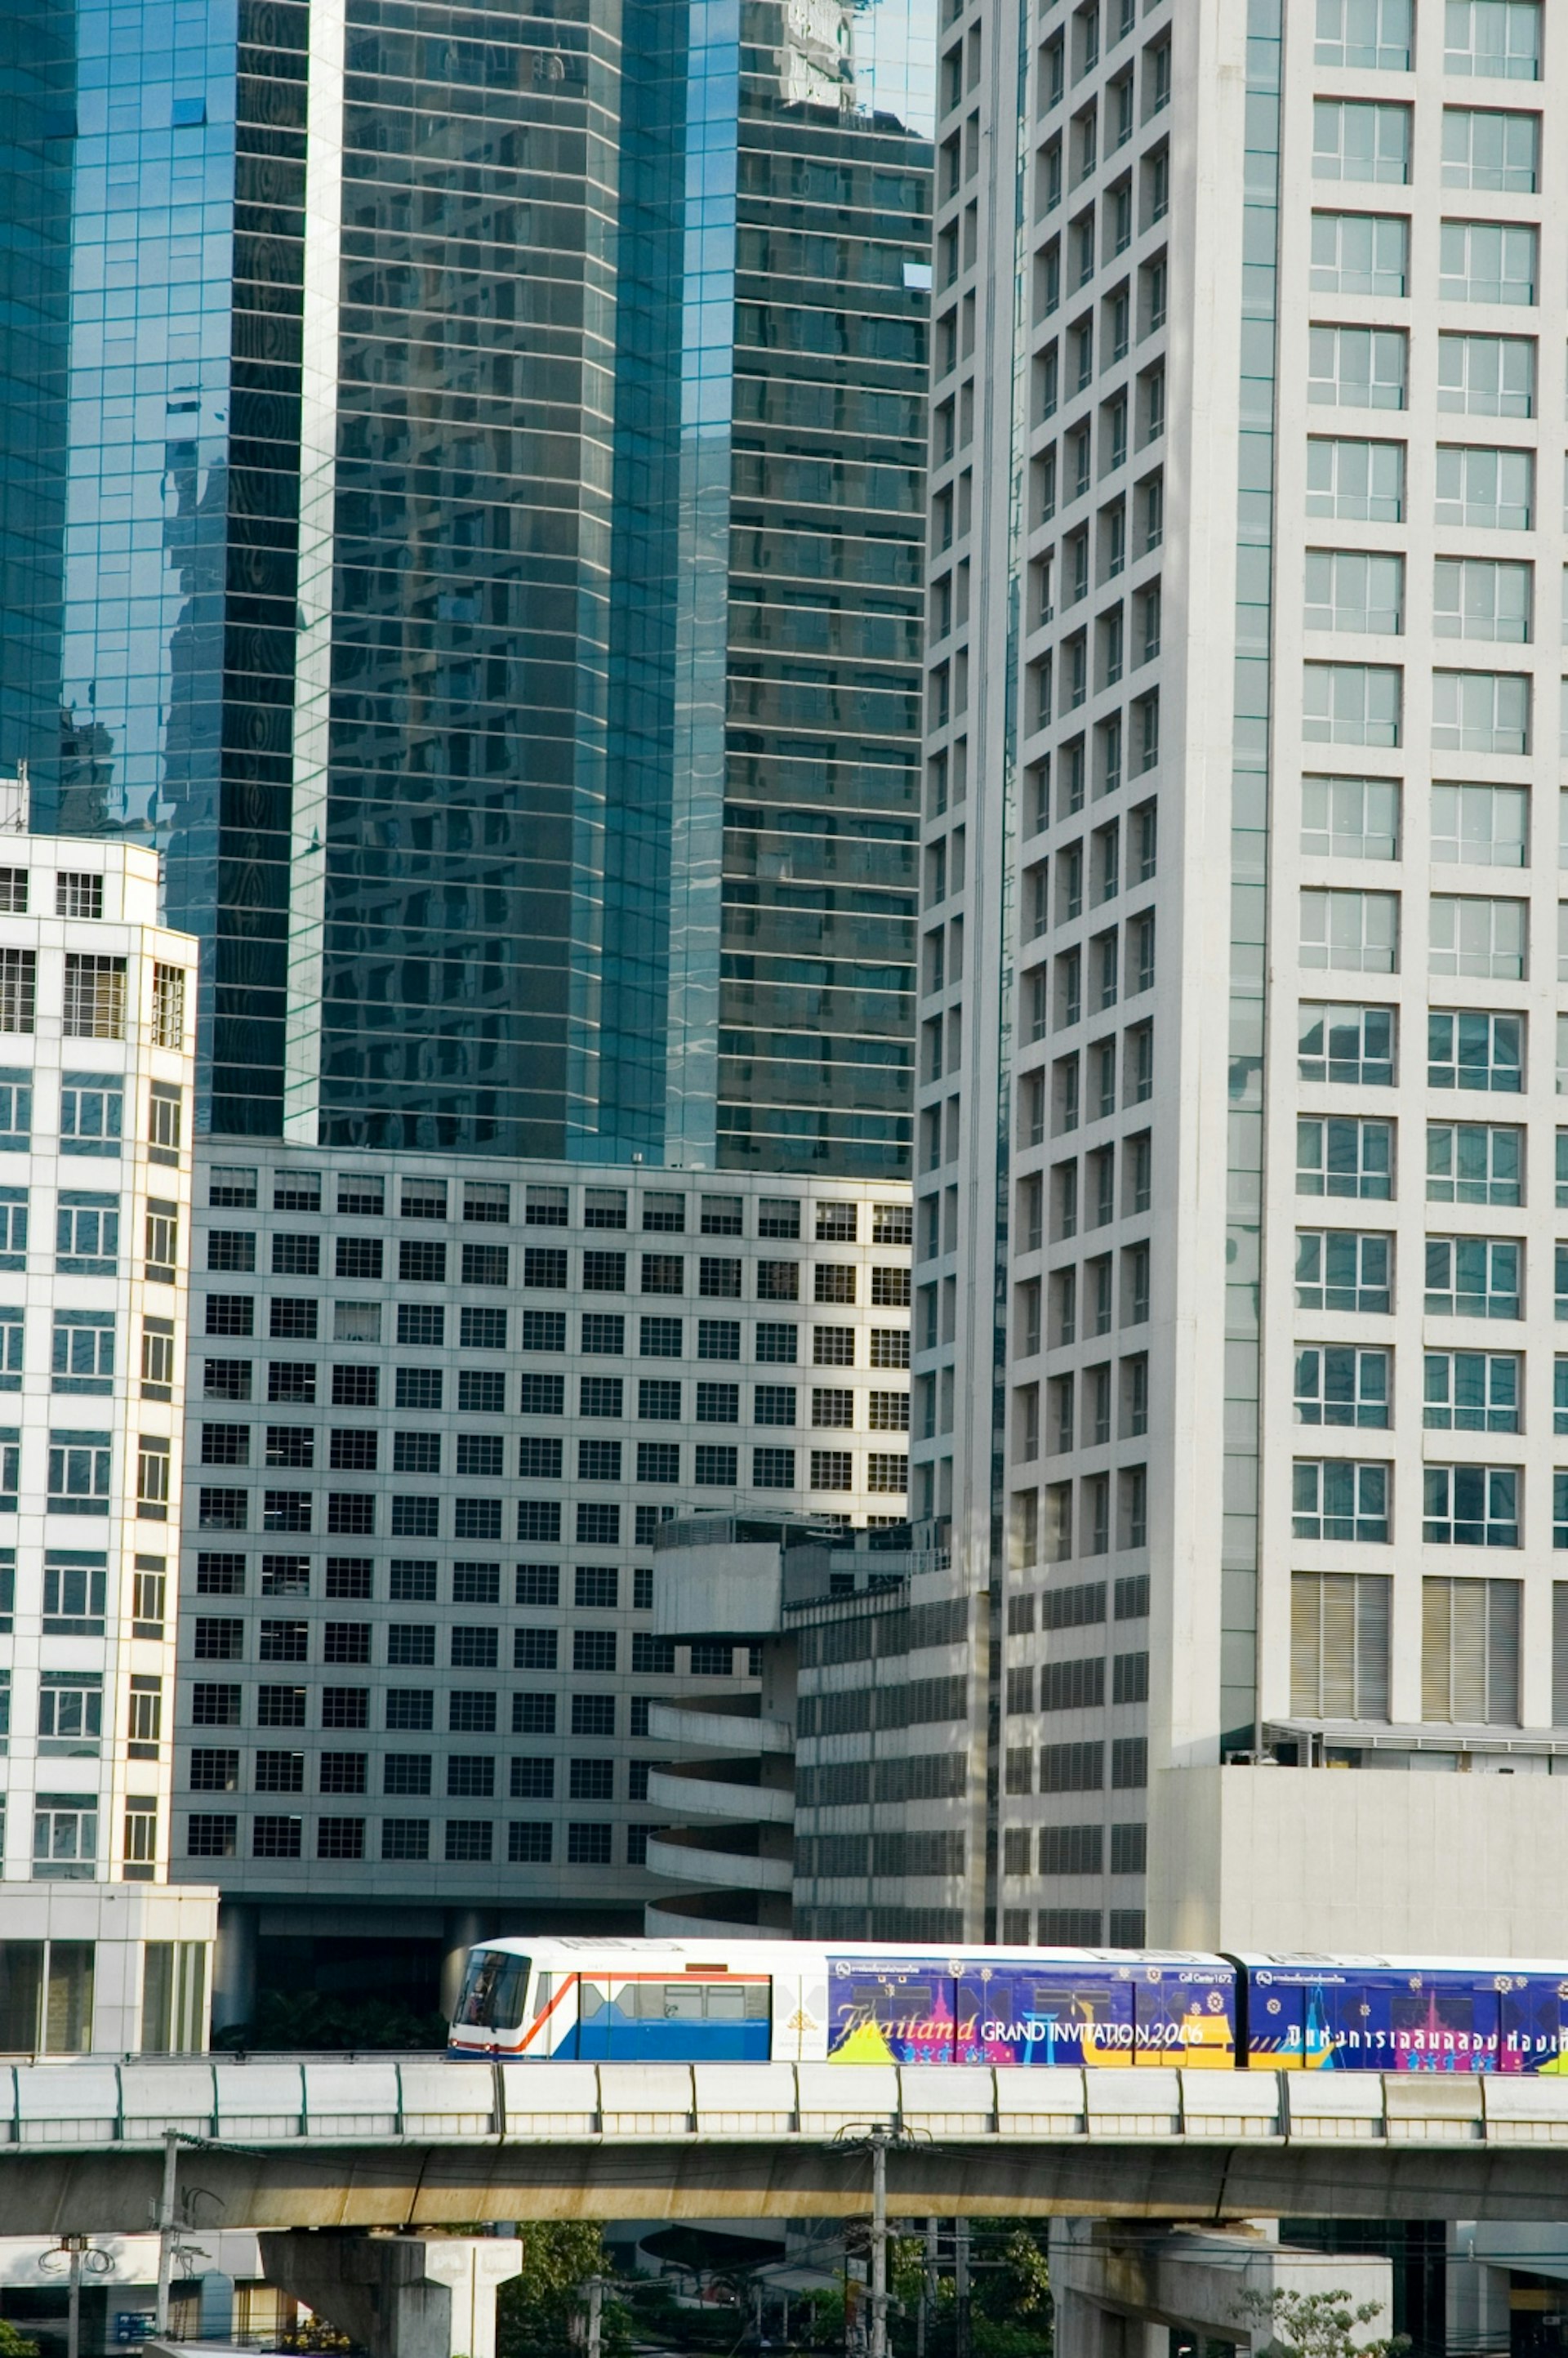 The BTS Skytrain weaving through city buildings in Bangkok © Mick Elmore / Lonely Planet 